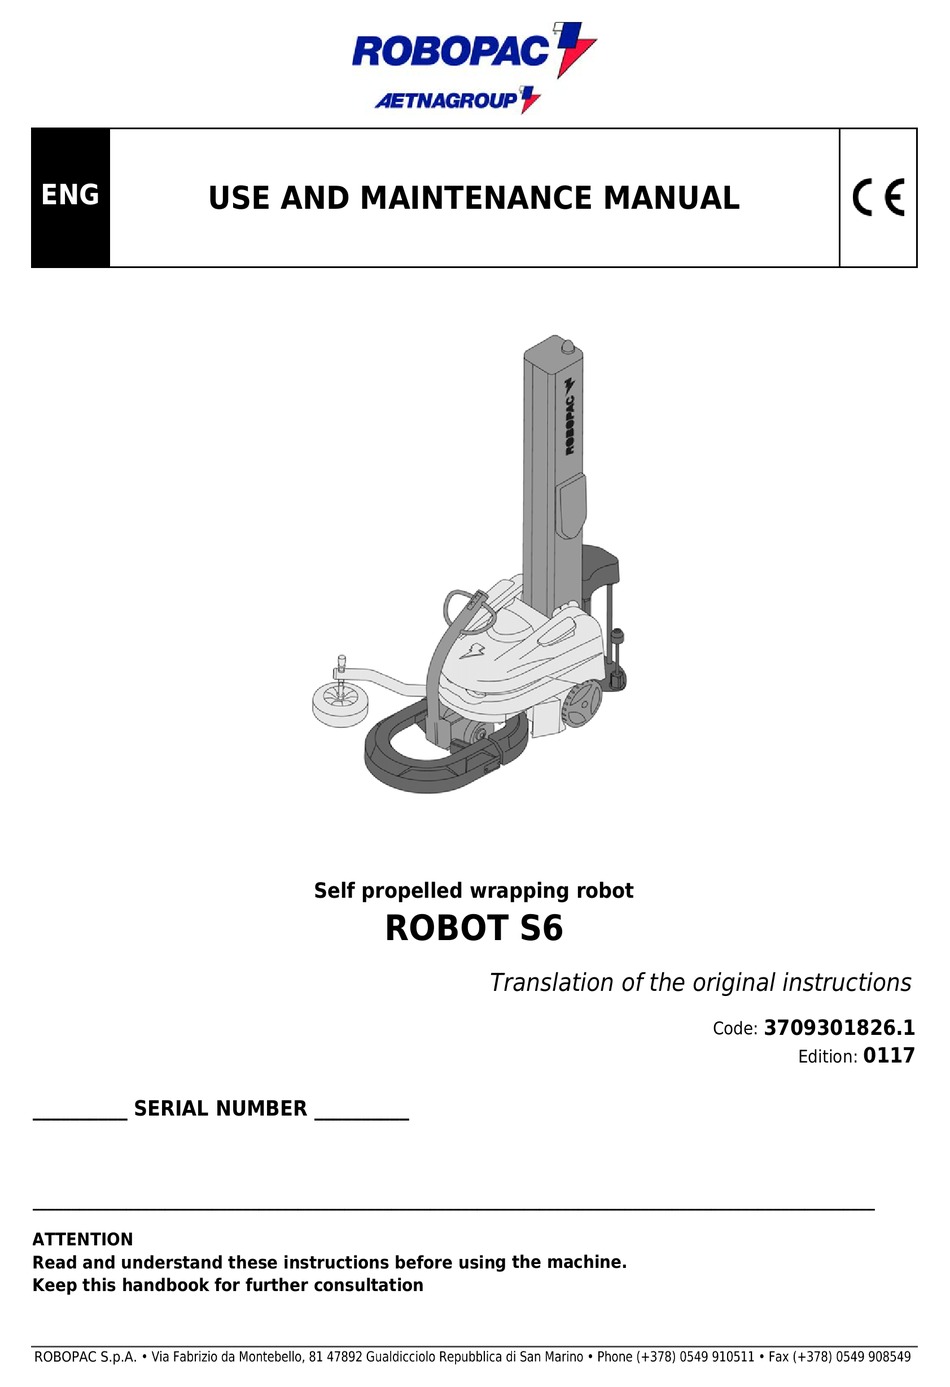 ROBOPAC S6 USE AND MAINTENANCE MANUAL Pdf Download | ManualsLib